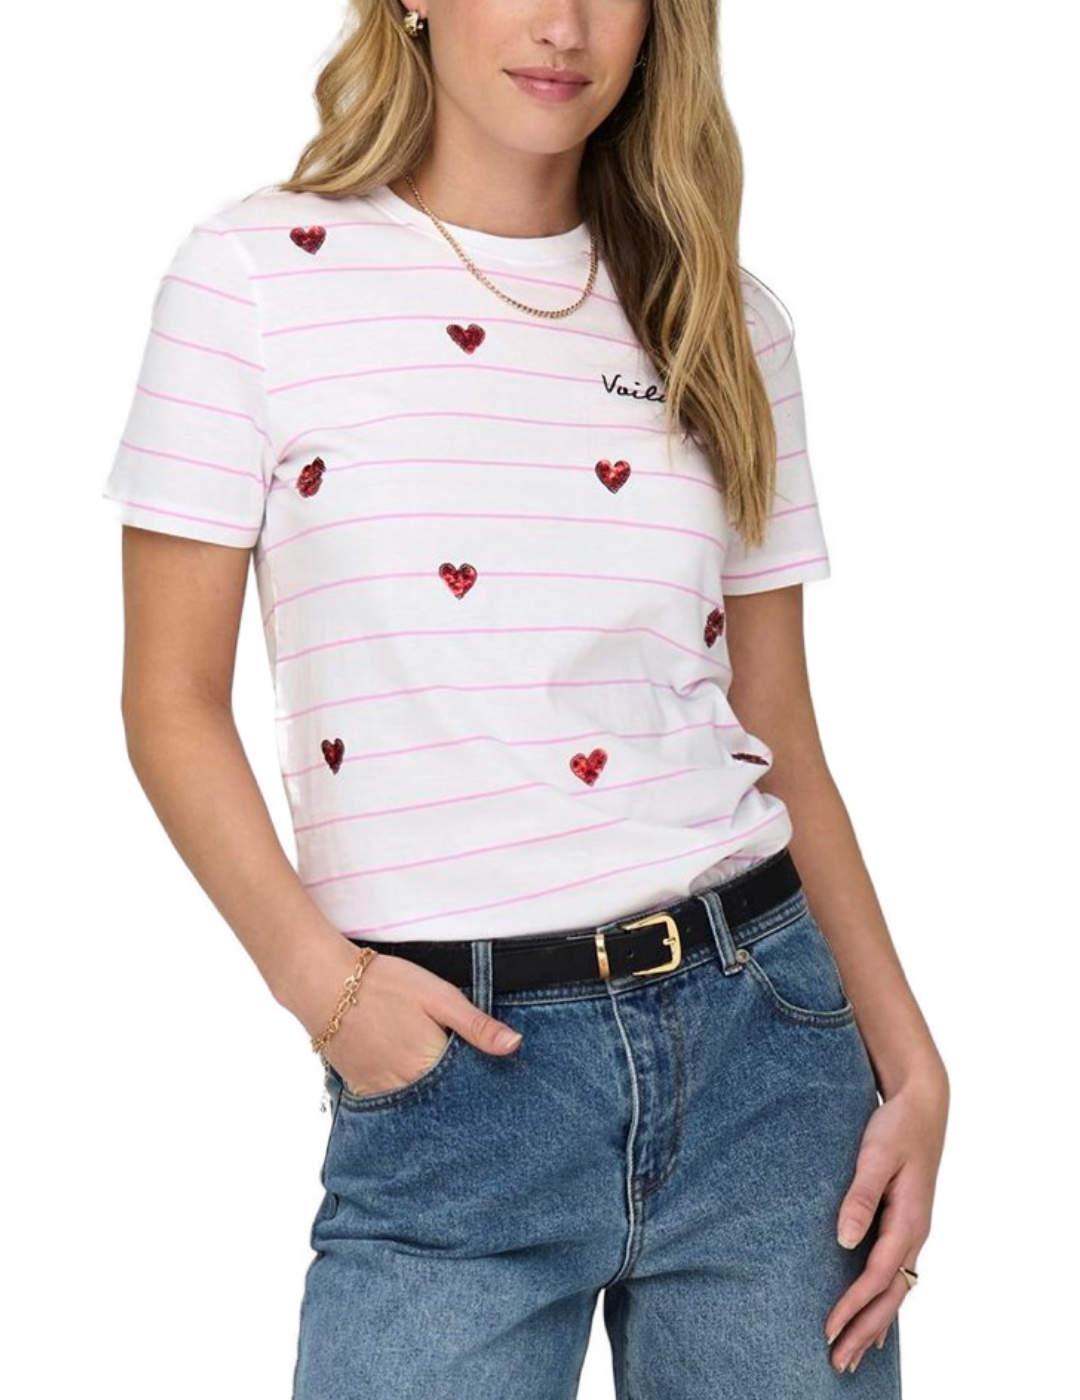 Camiseta Only Kita blanca y rosa a rayas manga corta mujer